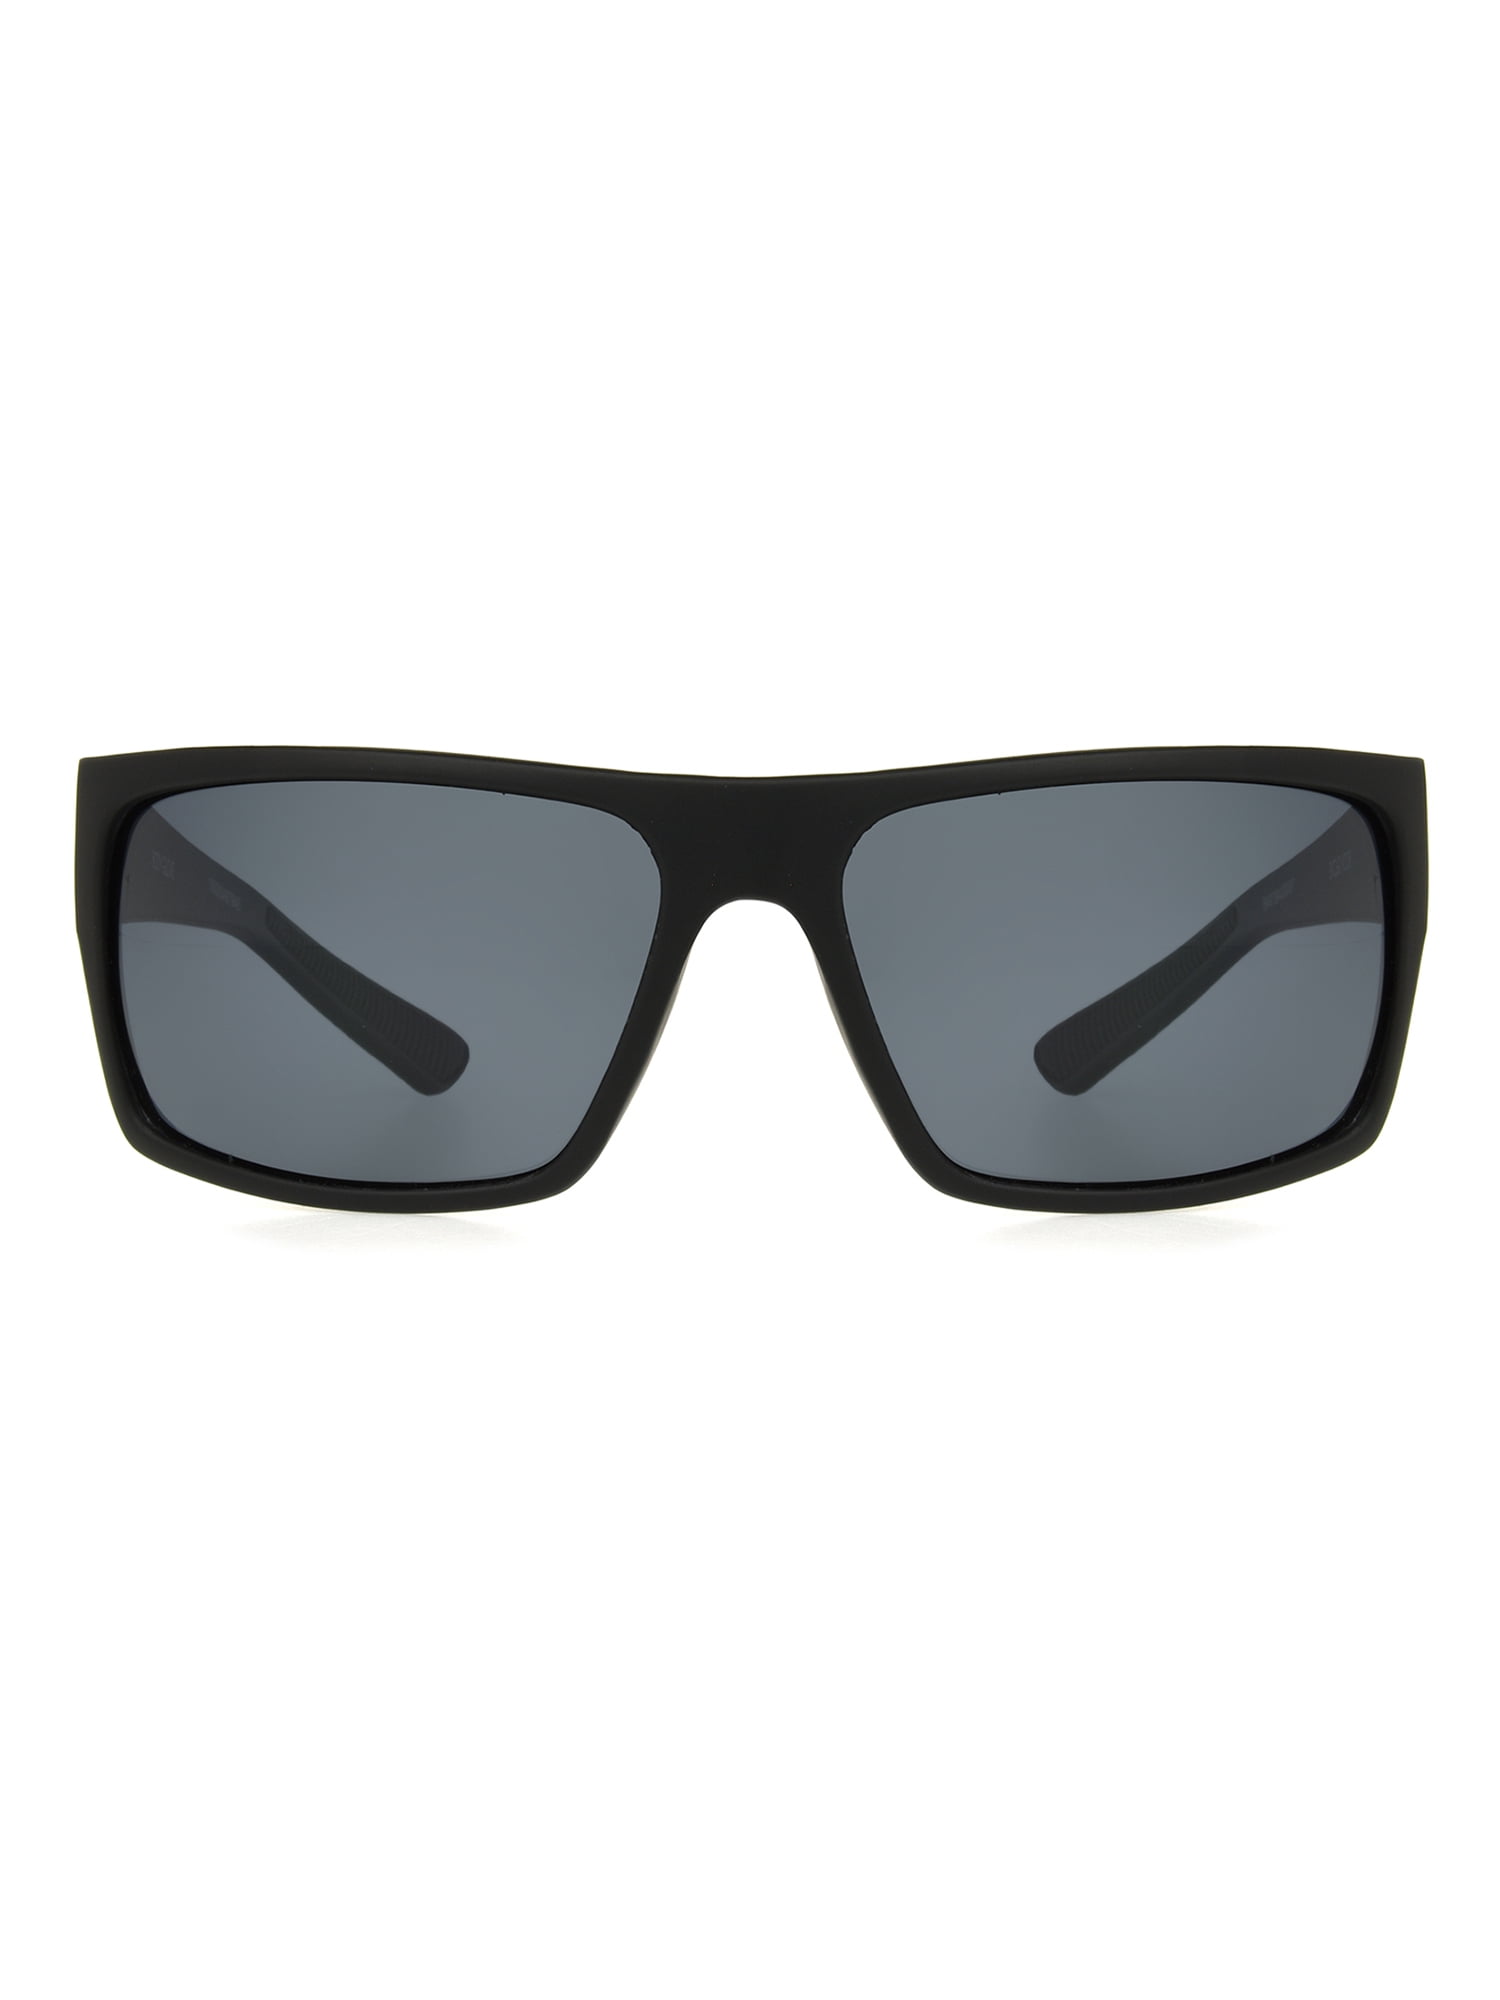  Body Glove Brosef Rectangle Sunglasses, Grey, 55 mm